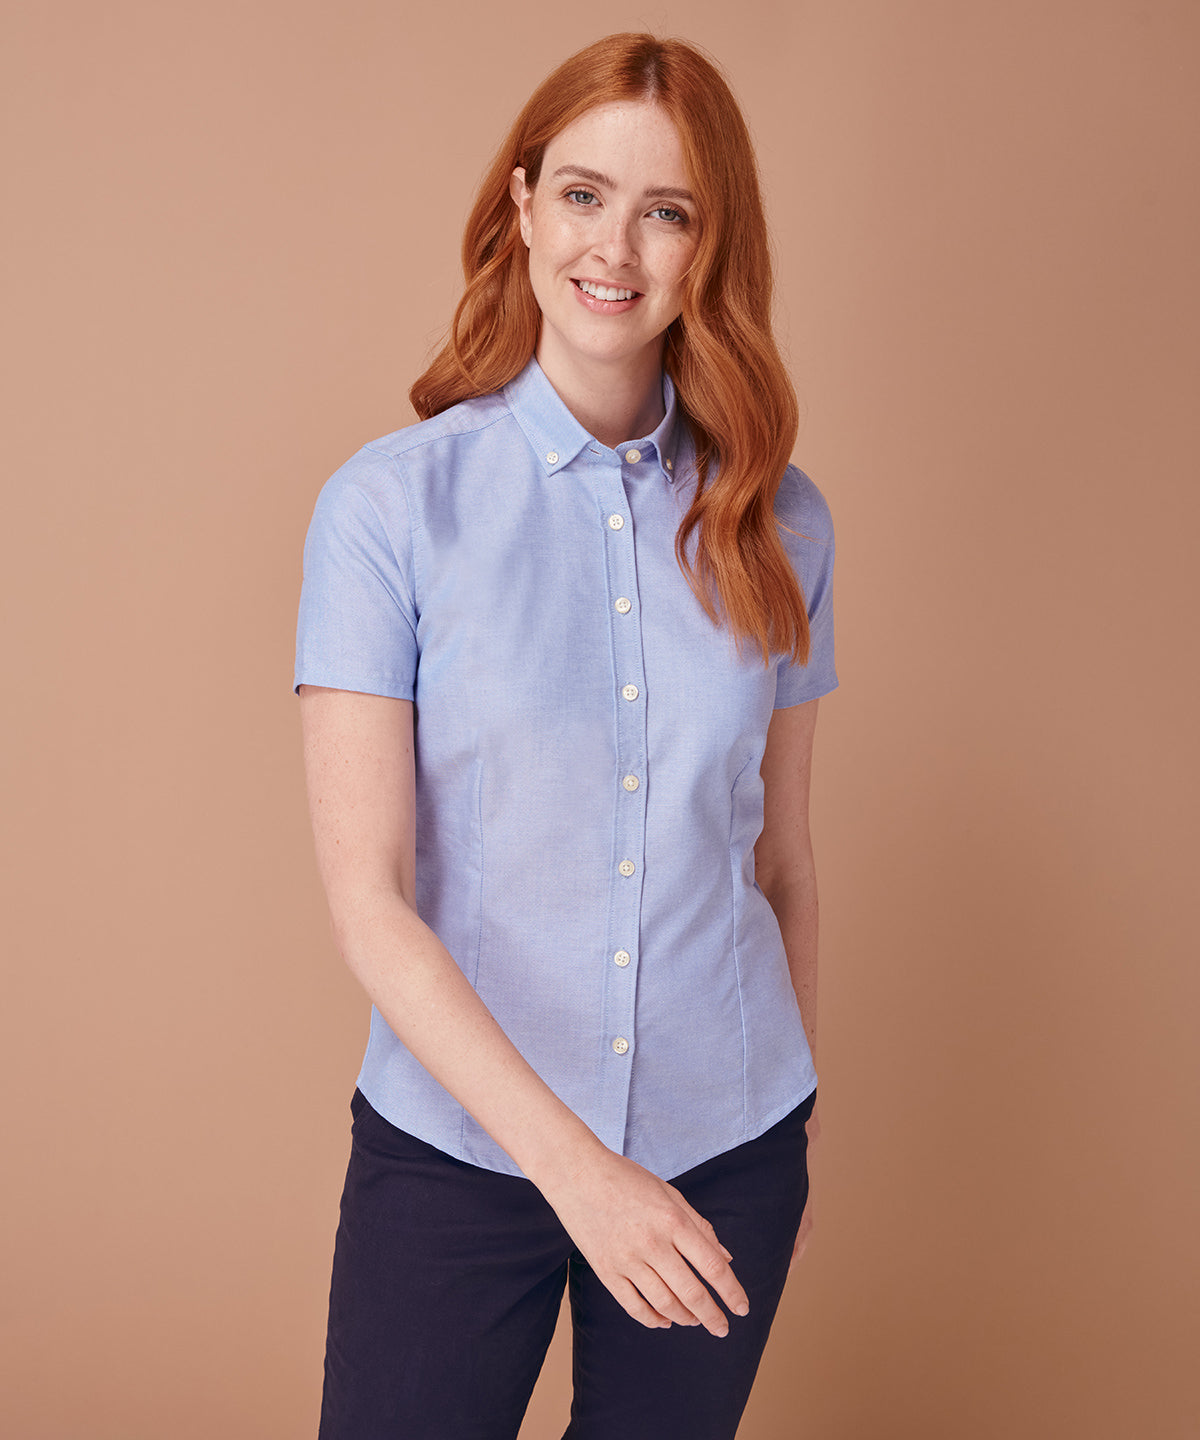 Bolir - Women's Modern Short Sleeve Oxford Shirt